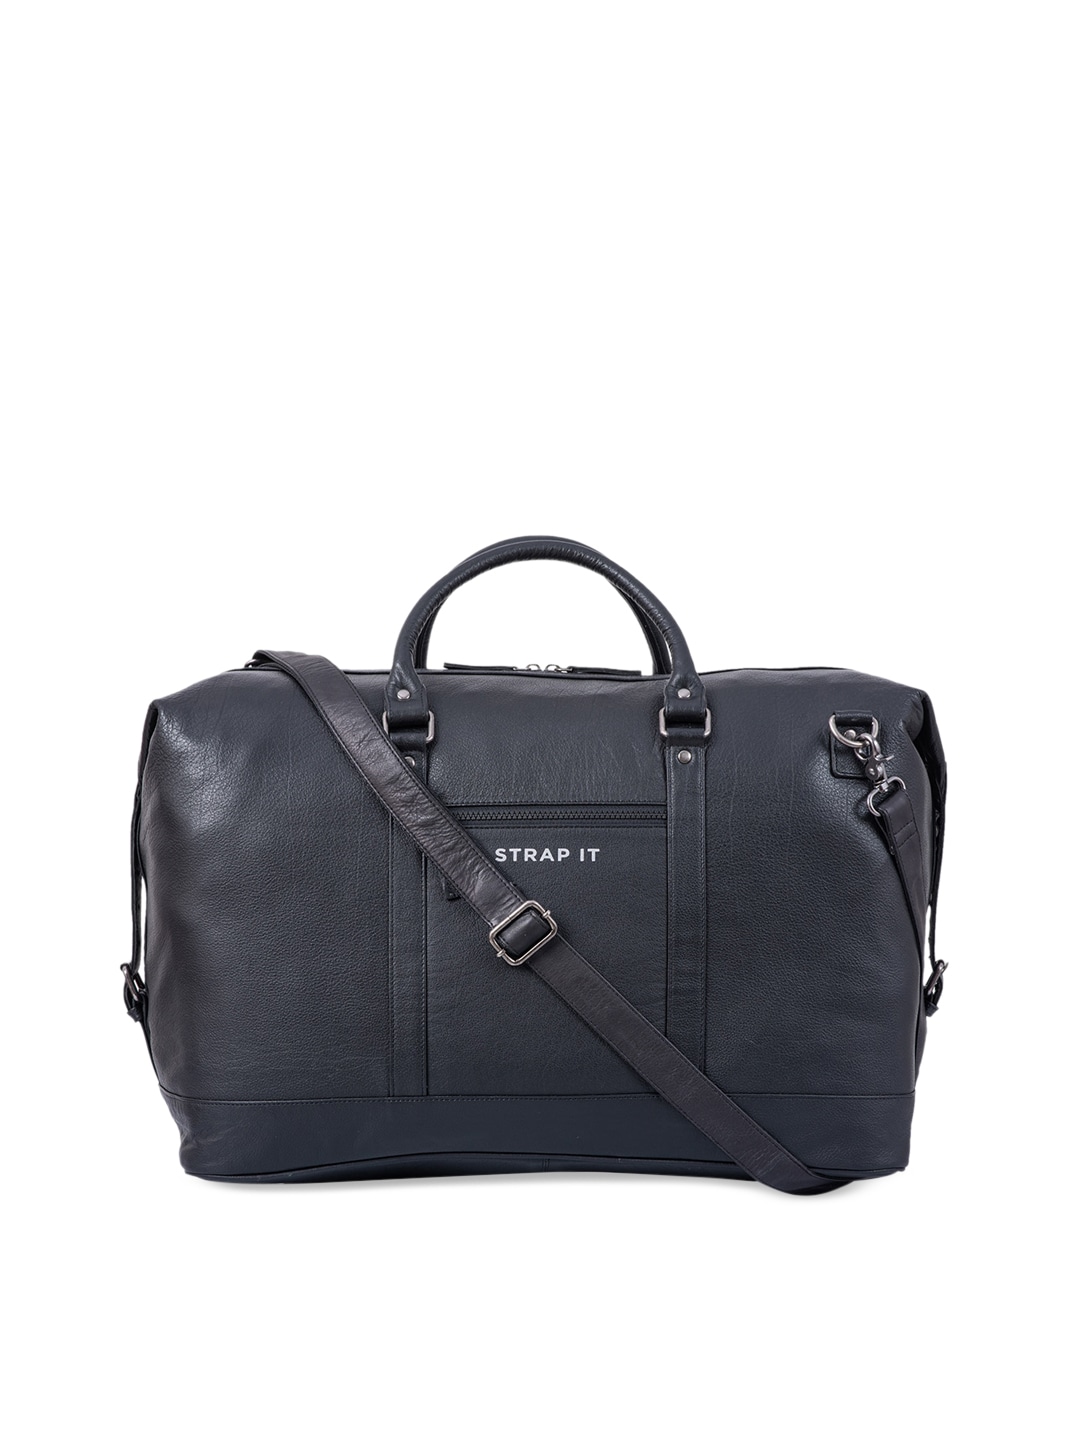 Accessories Duffel Bag | STRAP IT Black Solid Large Duffel Bag - EN65088